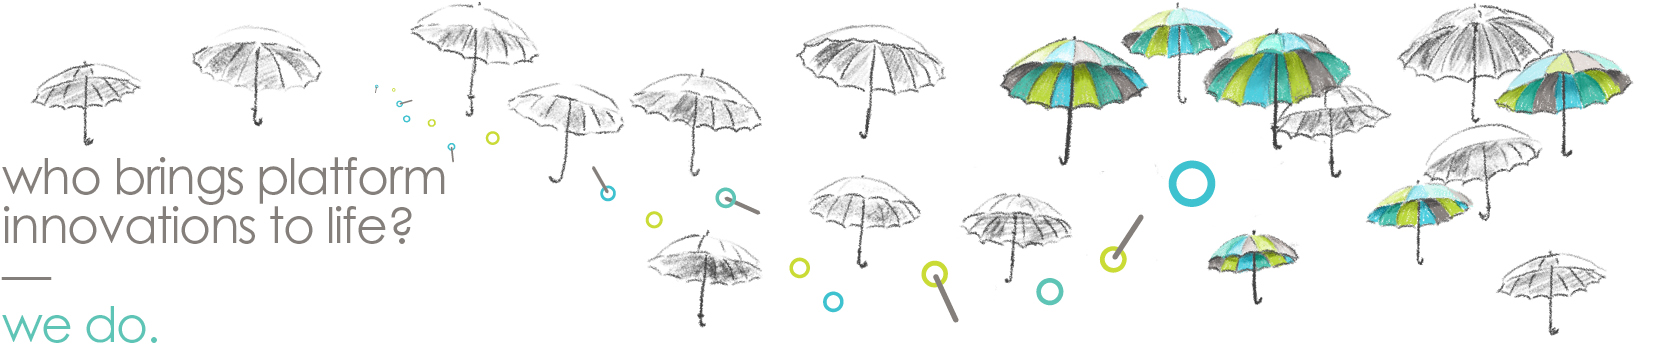 COR23-018_innovation-day-web-page-header-umbrellas_800x166.jpg